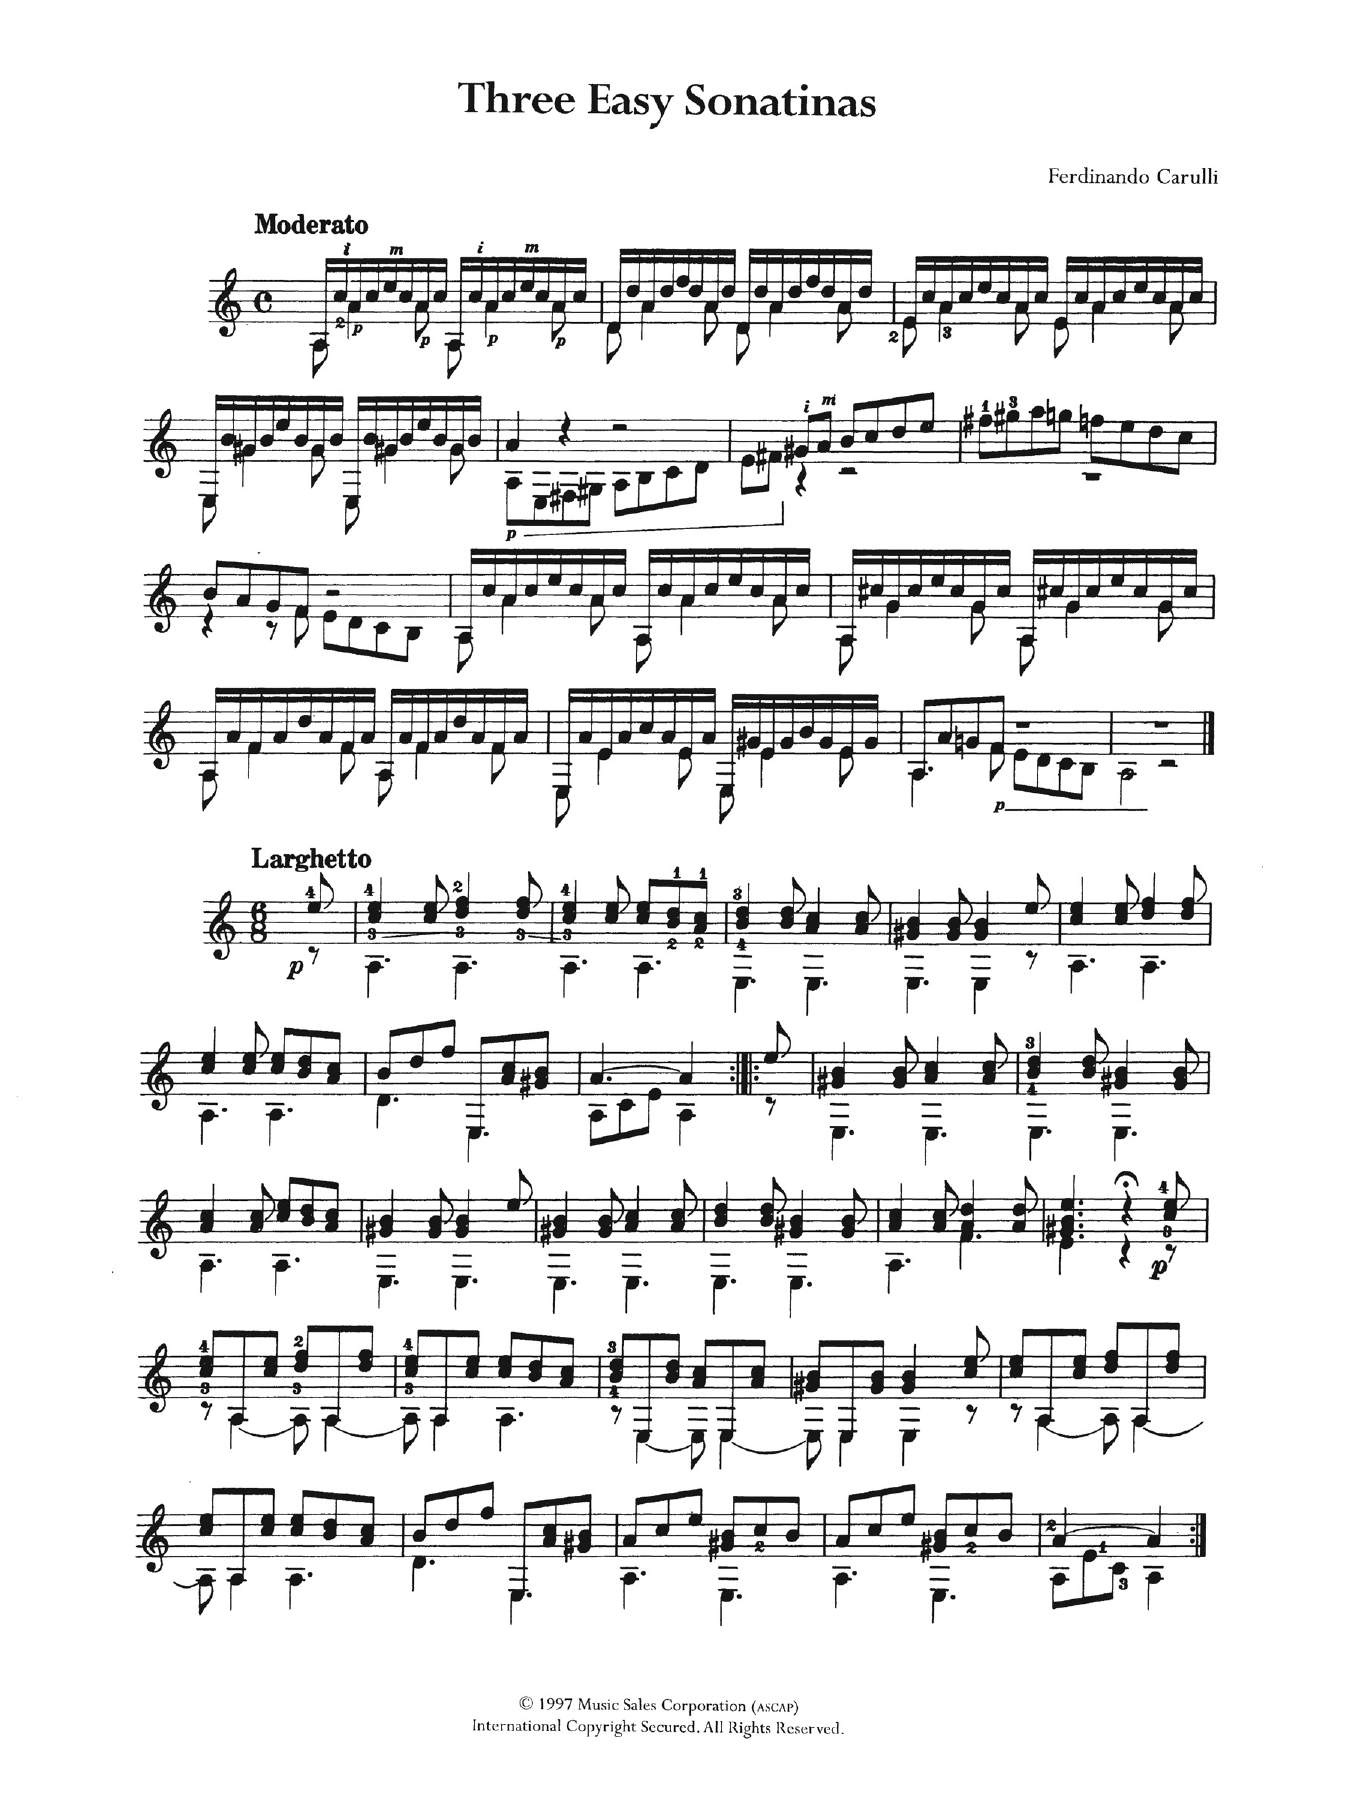 Ferdinando Carulli Three Easy Sonatinas Sheet Music Notes & Chords for Guitar - Download or Print PDF